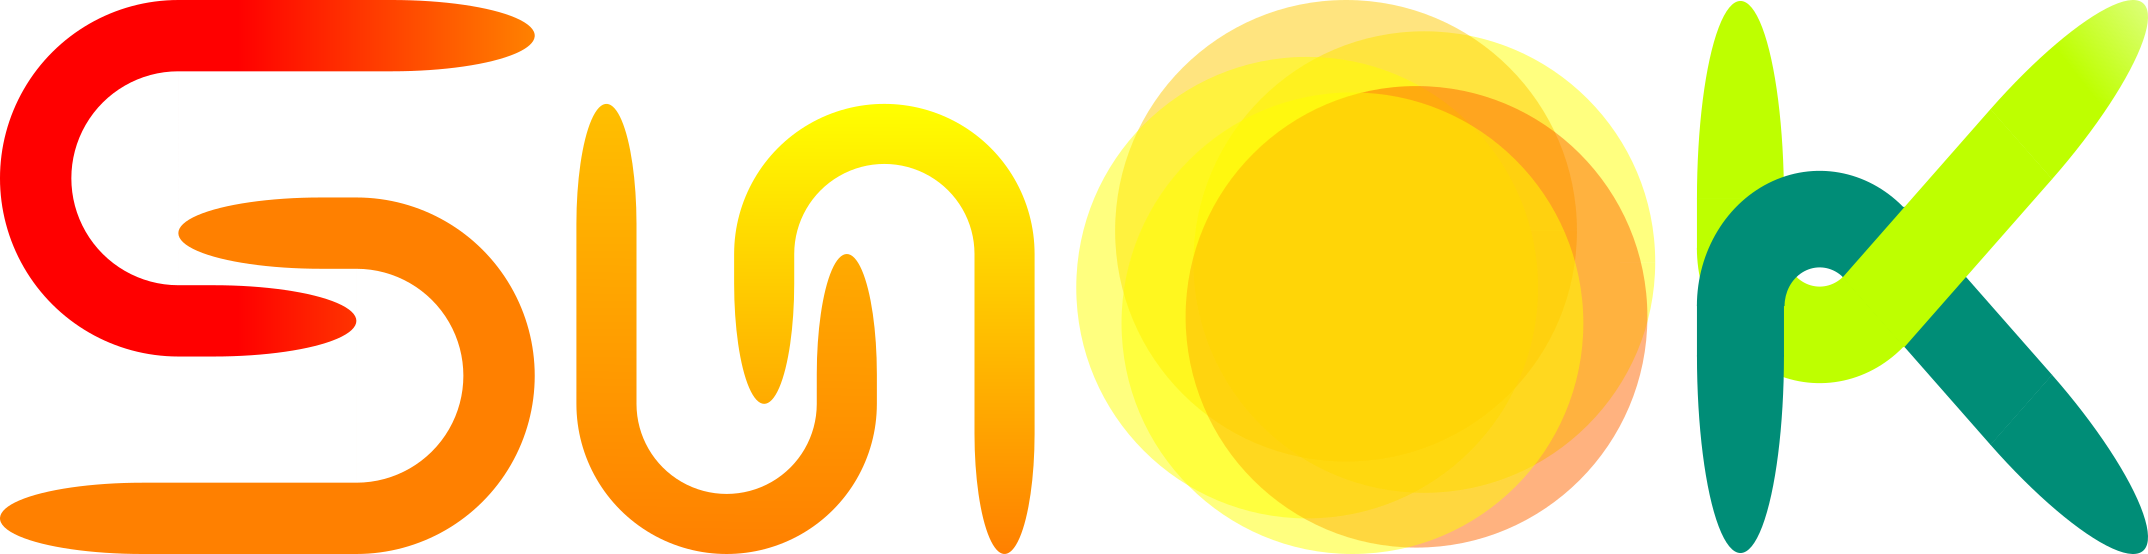 Logo-SunOK-300dpi-3s2hxLfAcnTIg6